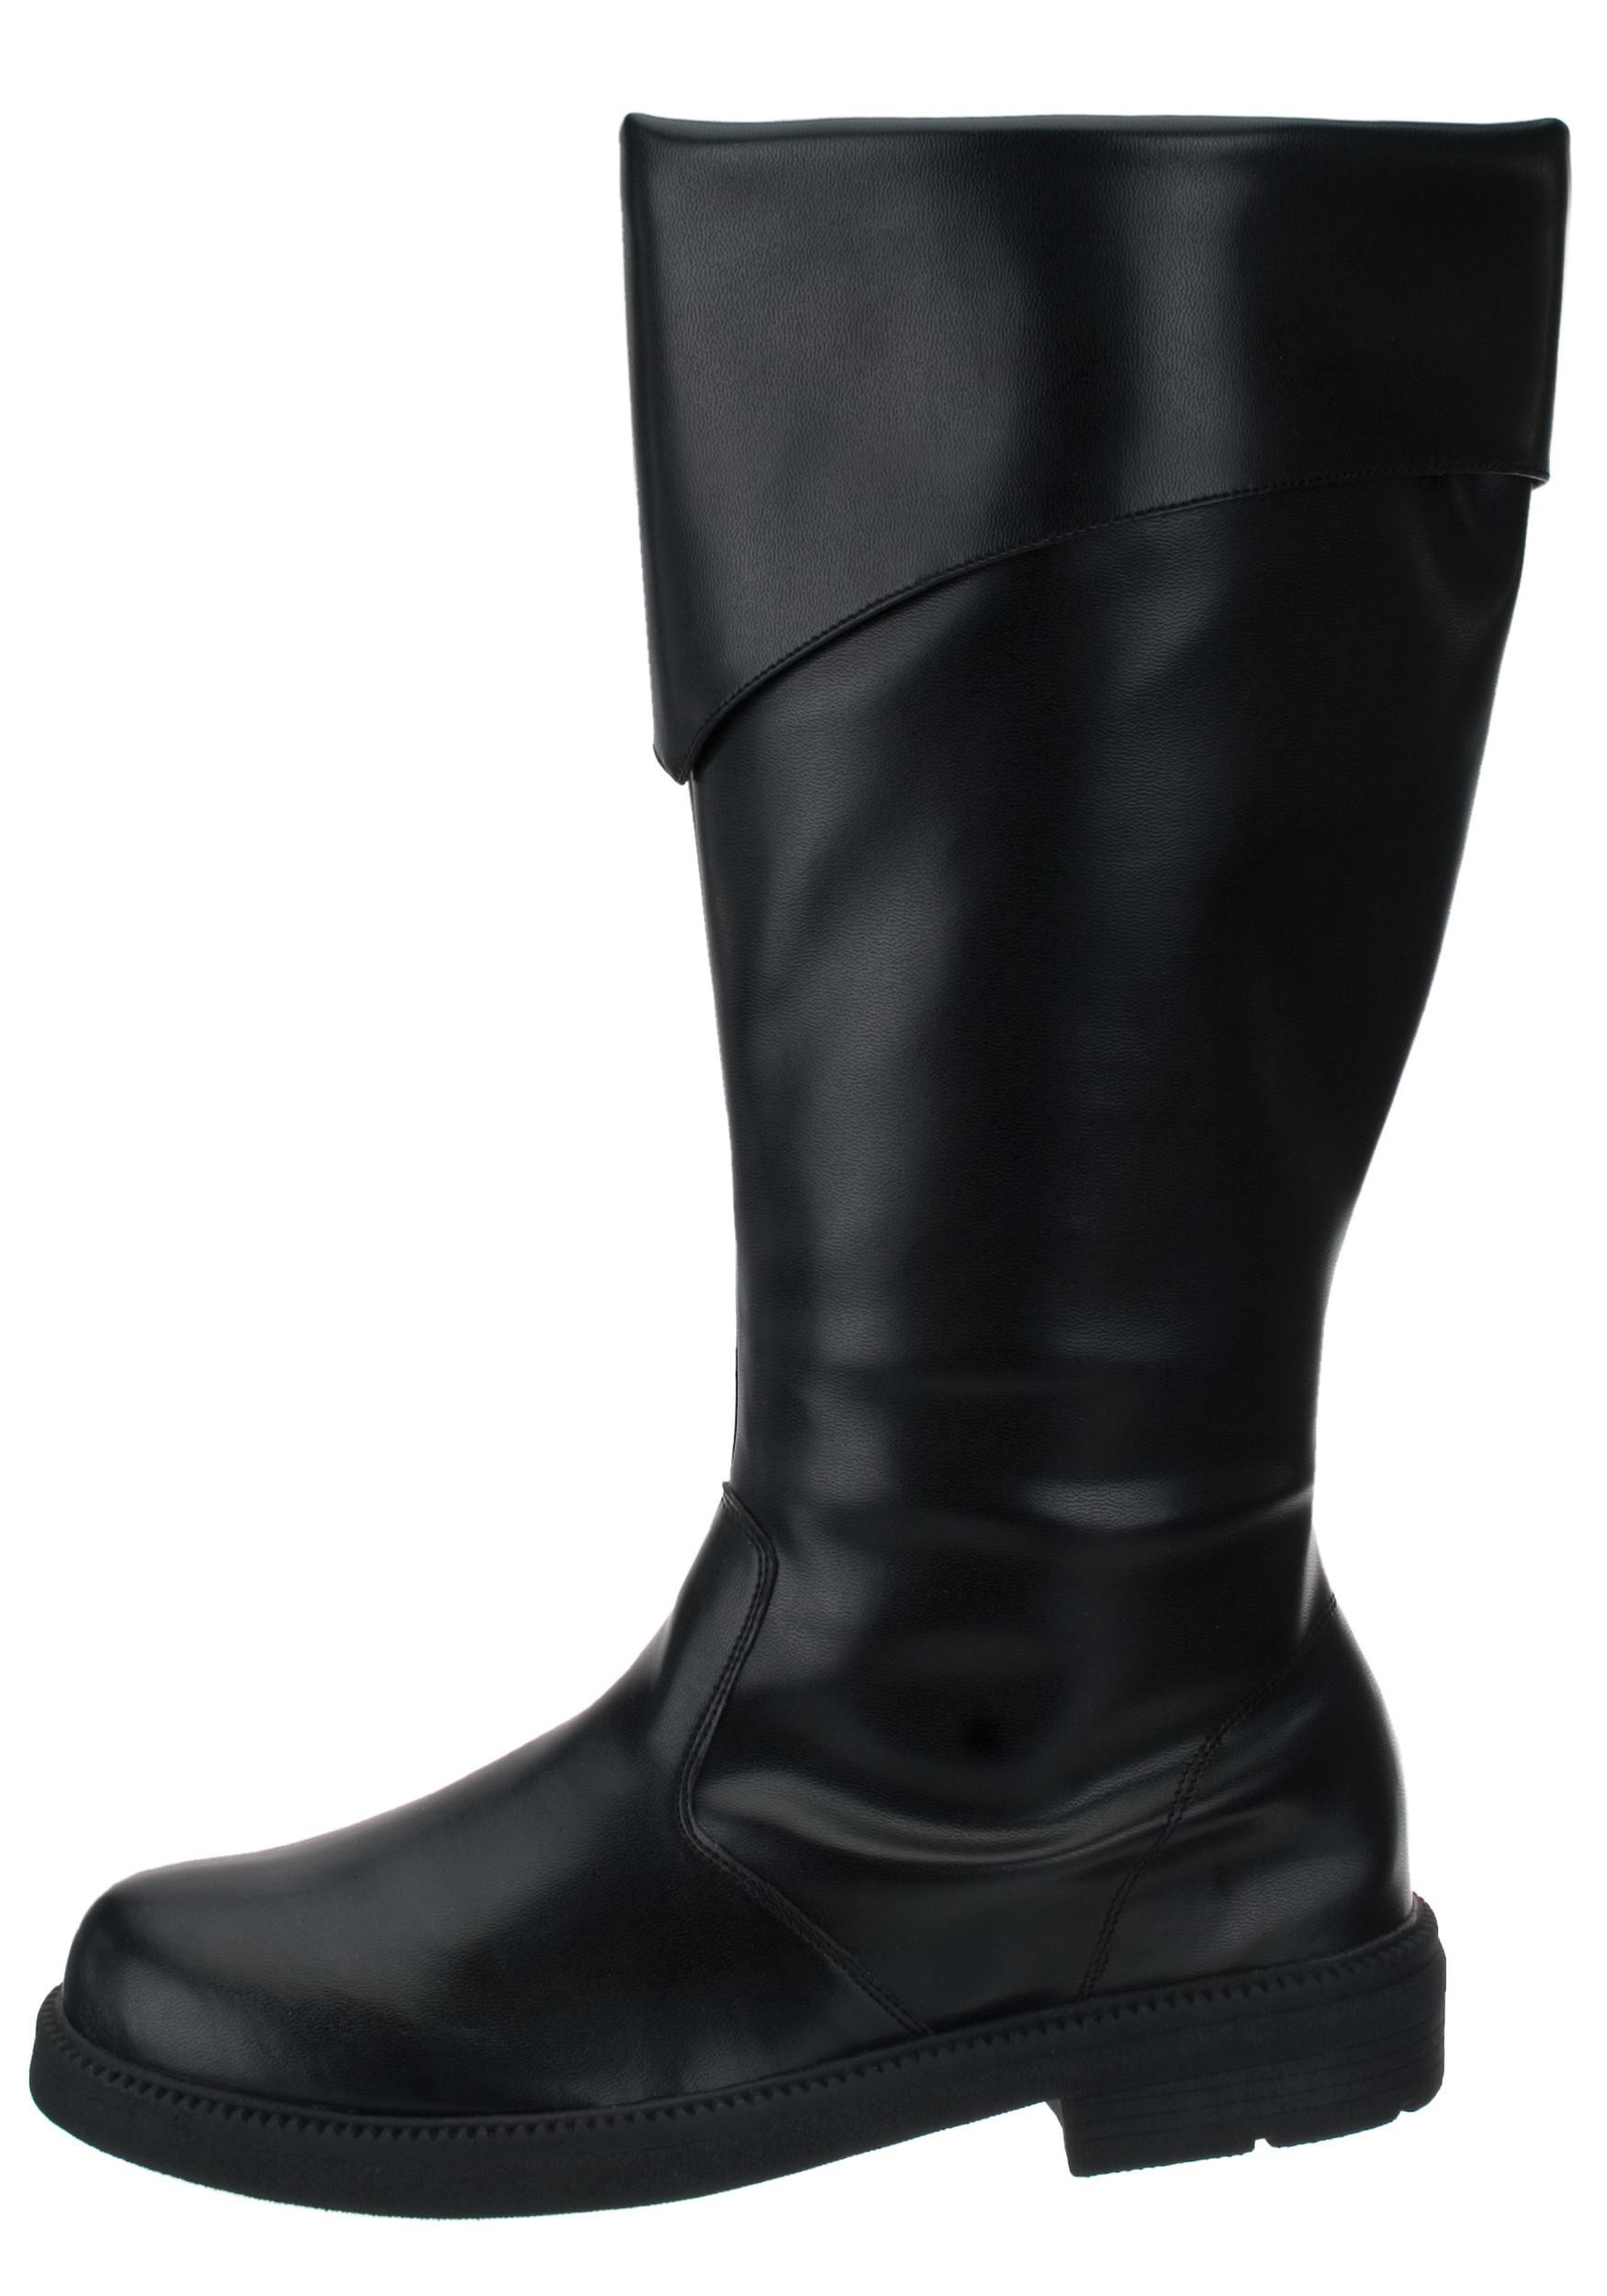 tall-black-costume-boots.jpg